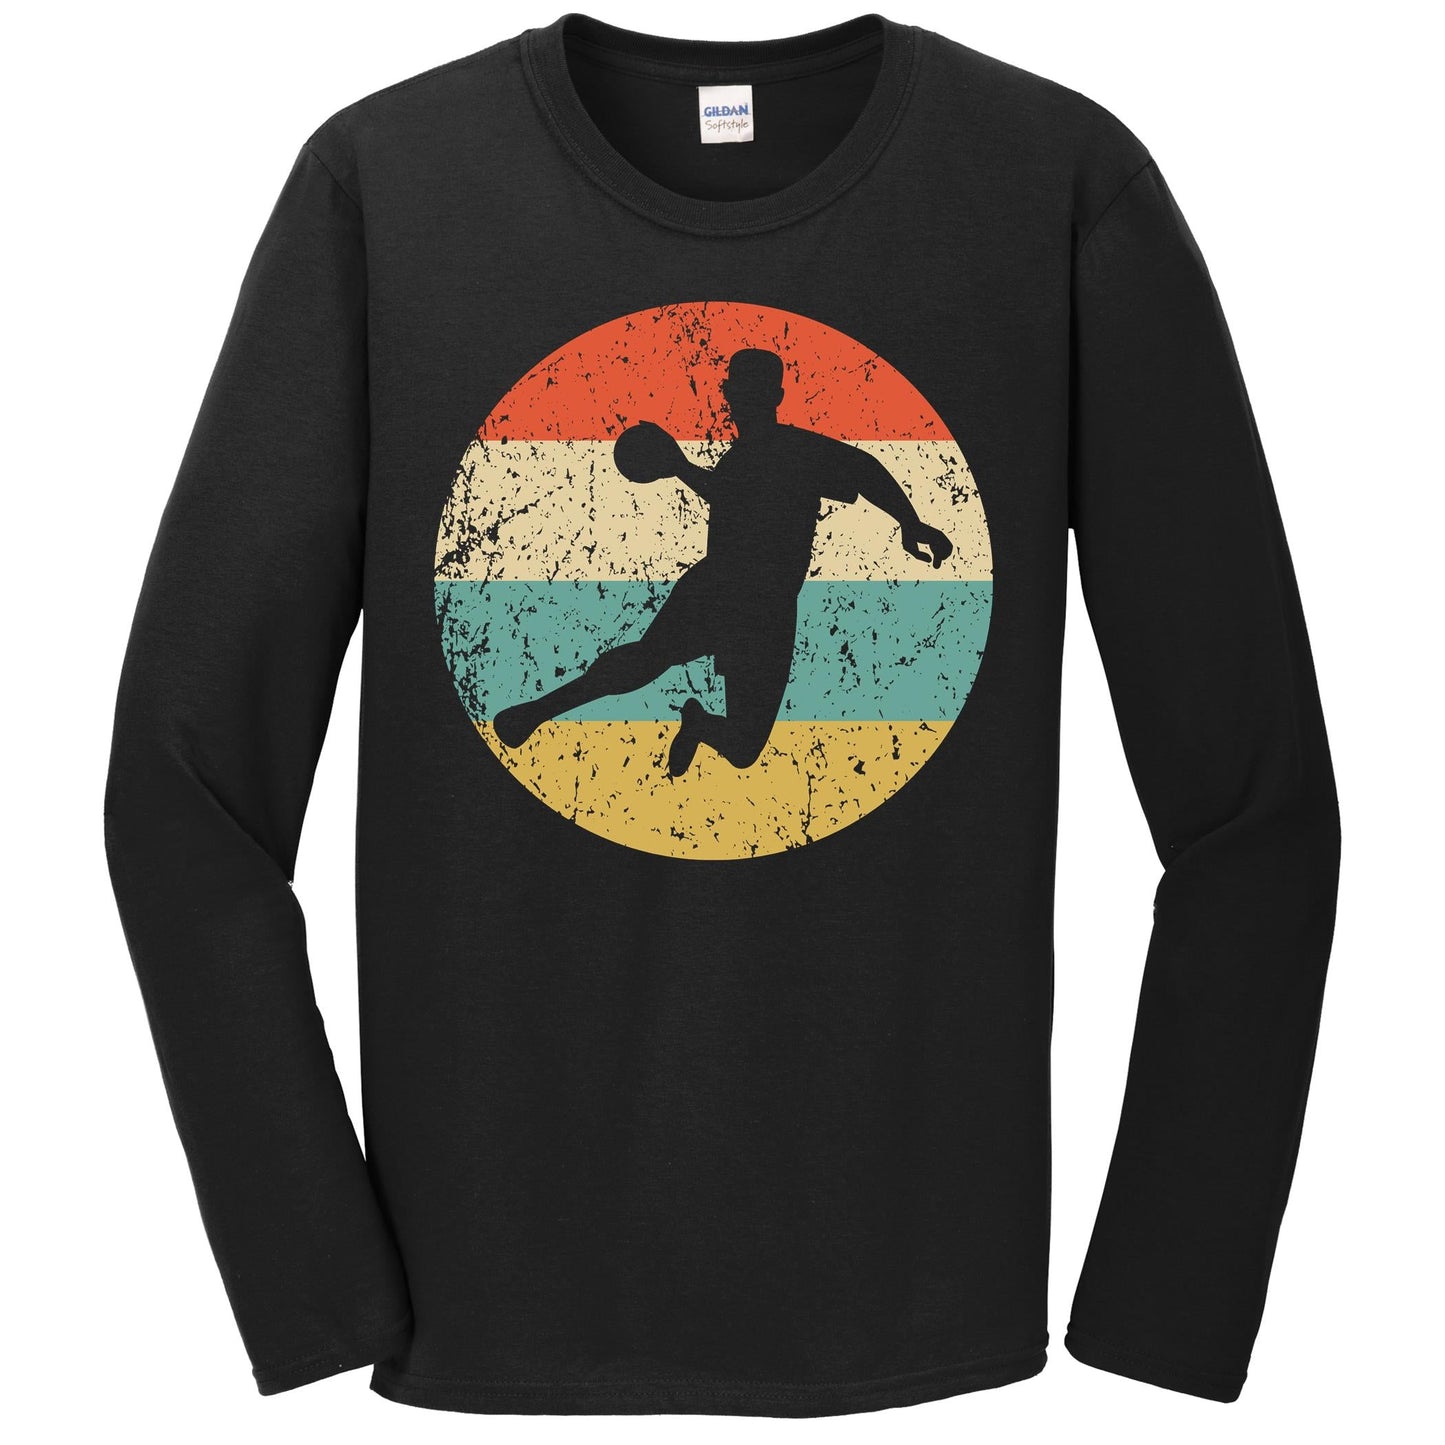 Dodgeball Shirt - Vintage Retro Dodgeball Player Long Sleeve T-Shirt